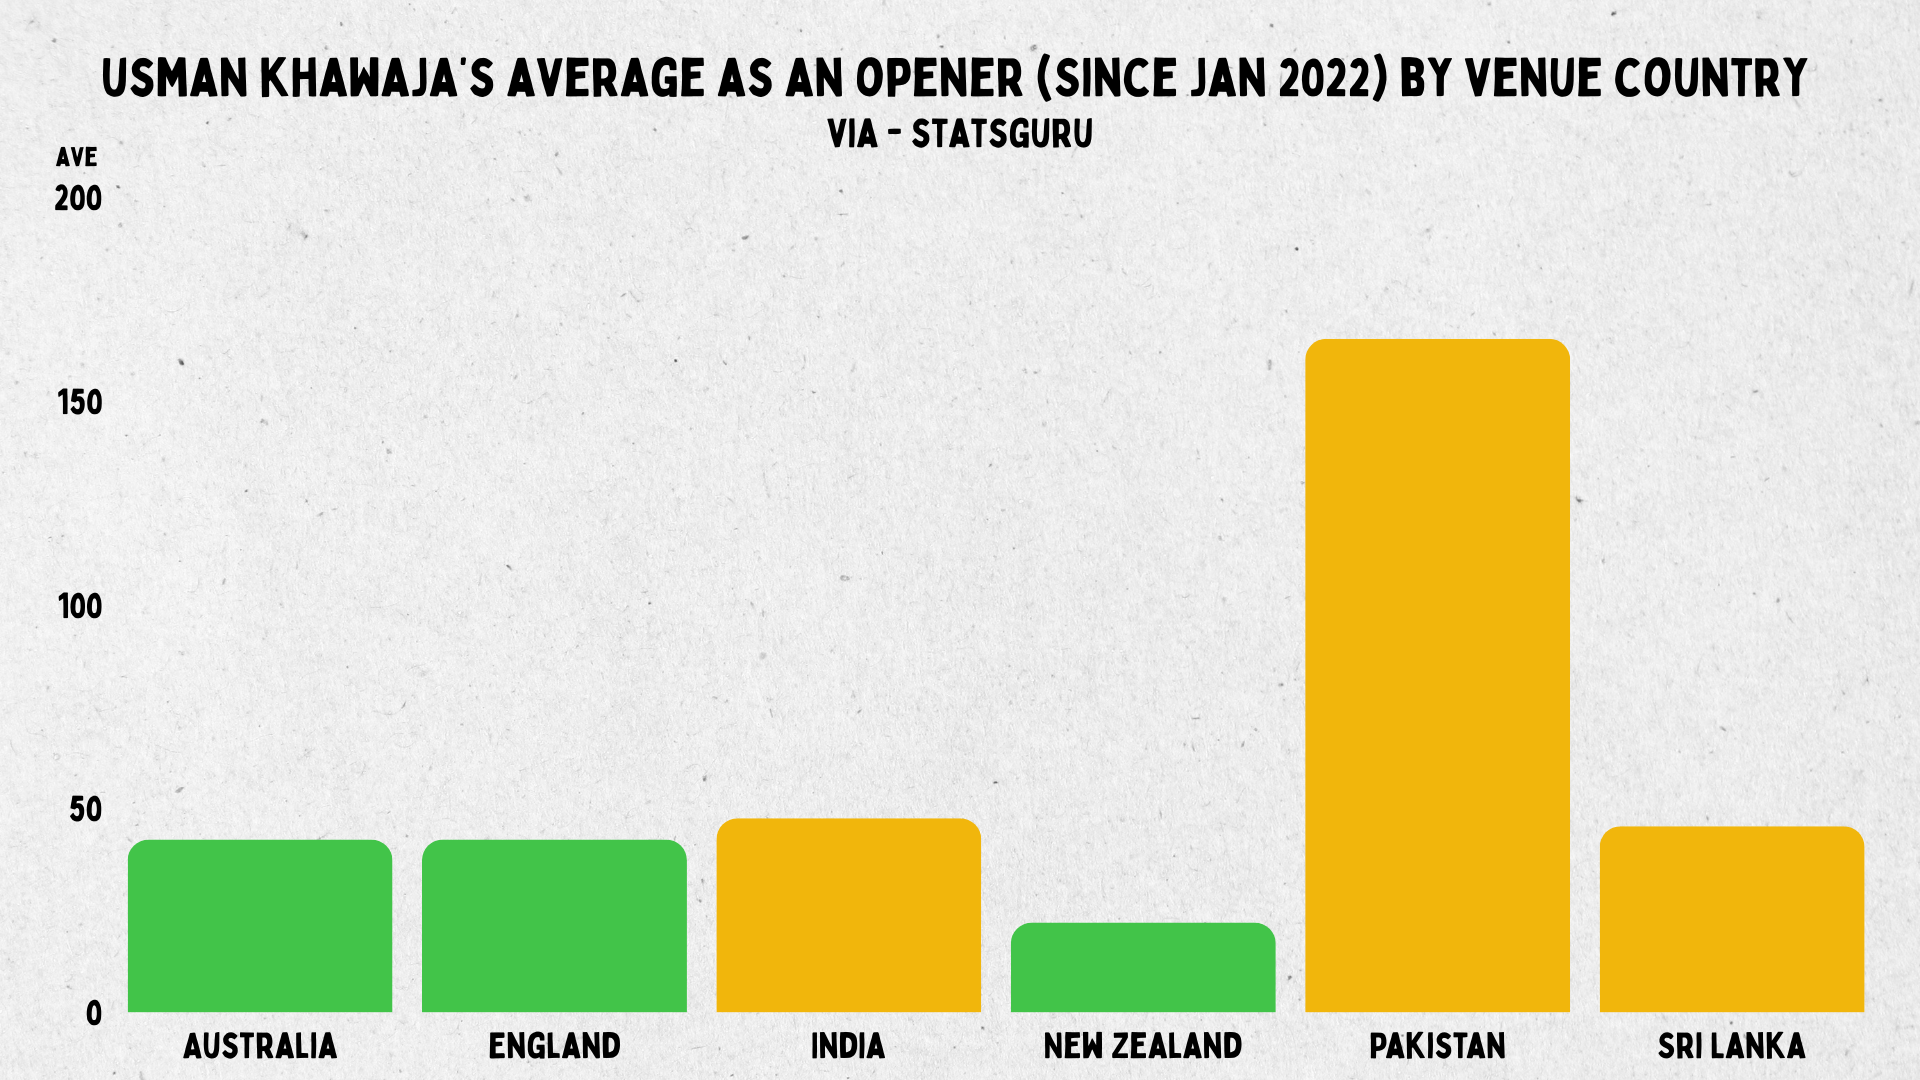 Who is cricket's best Test opener?